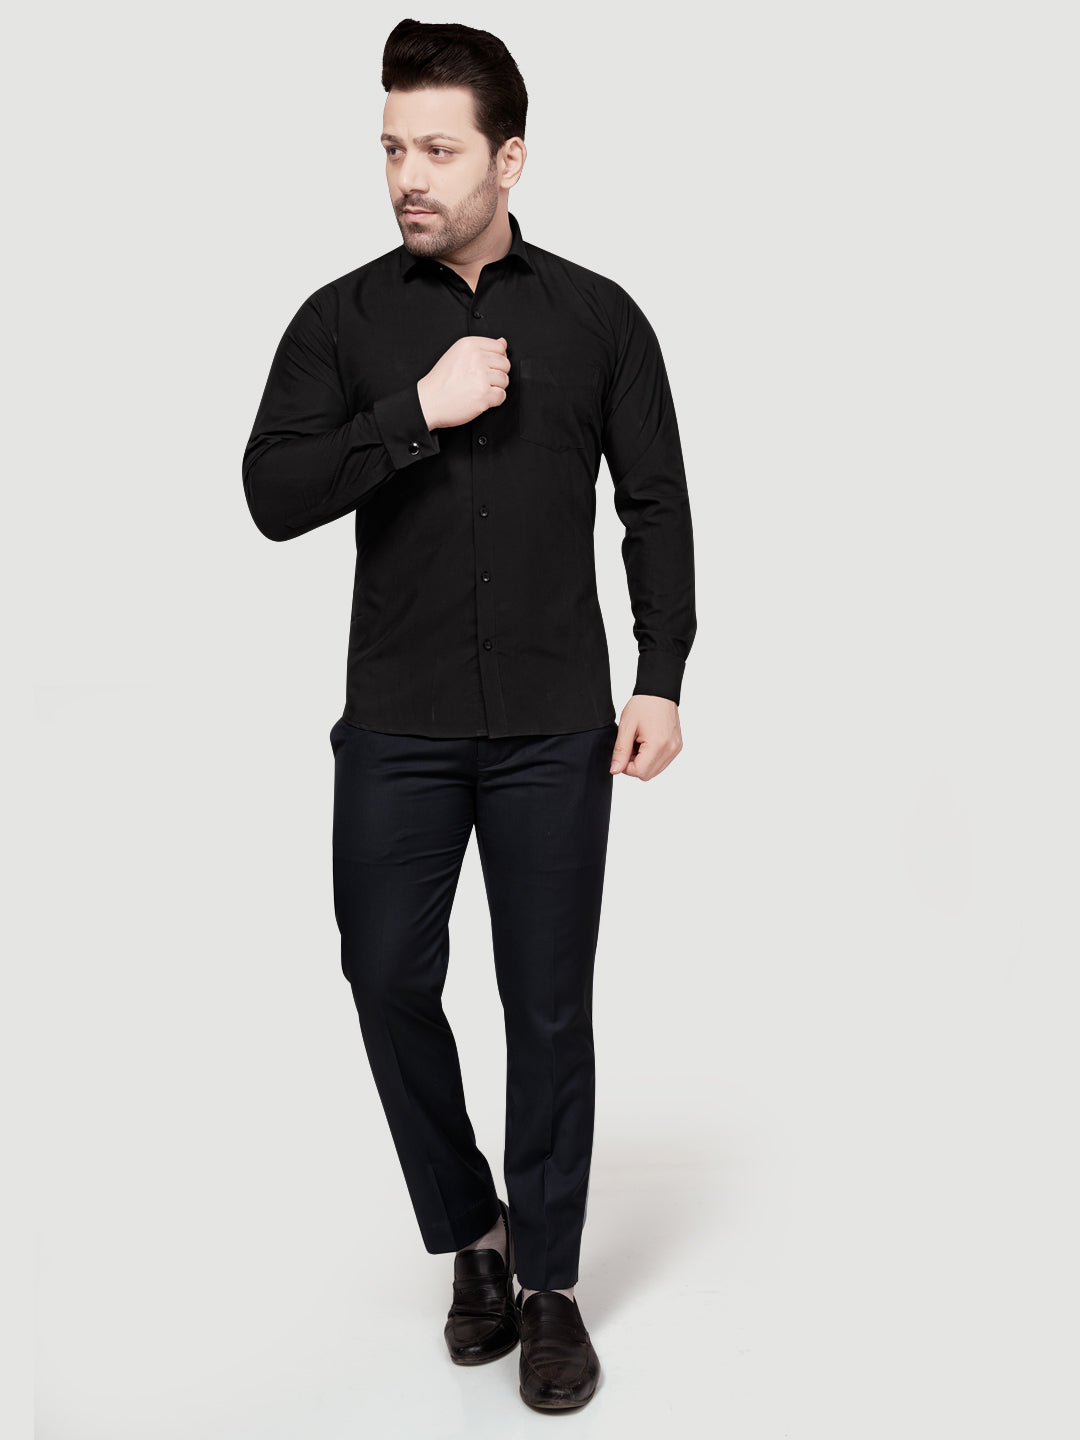 Black & White Men's Formal Cufflink Shirt Black